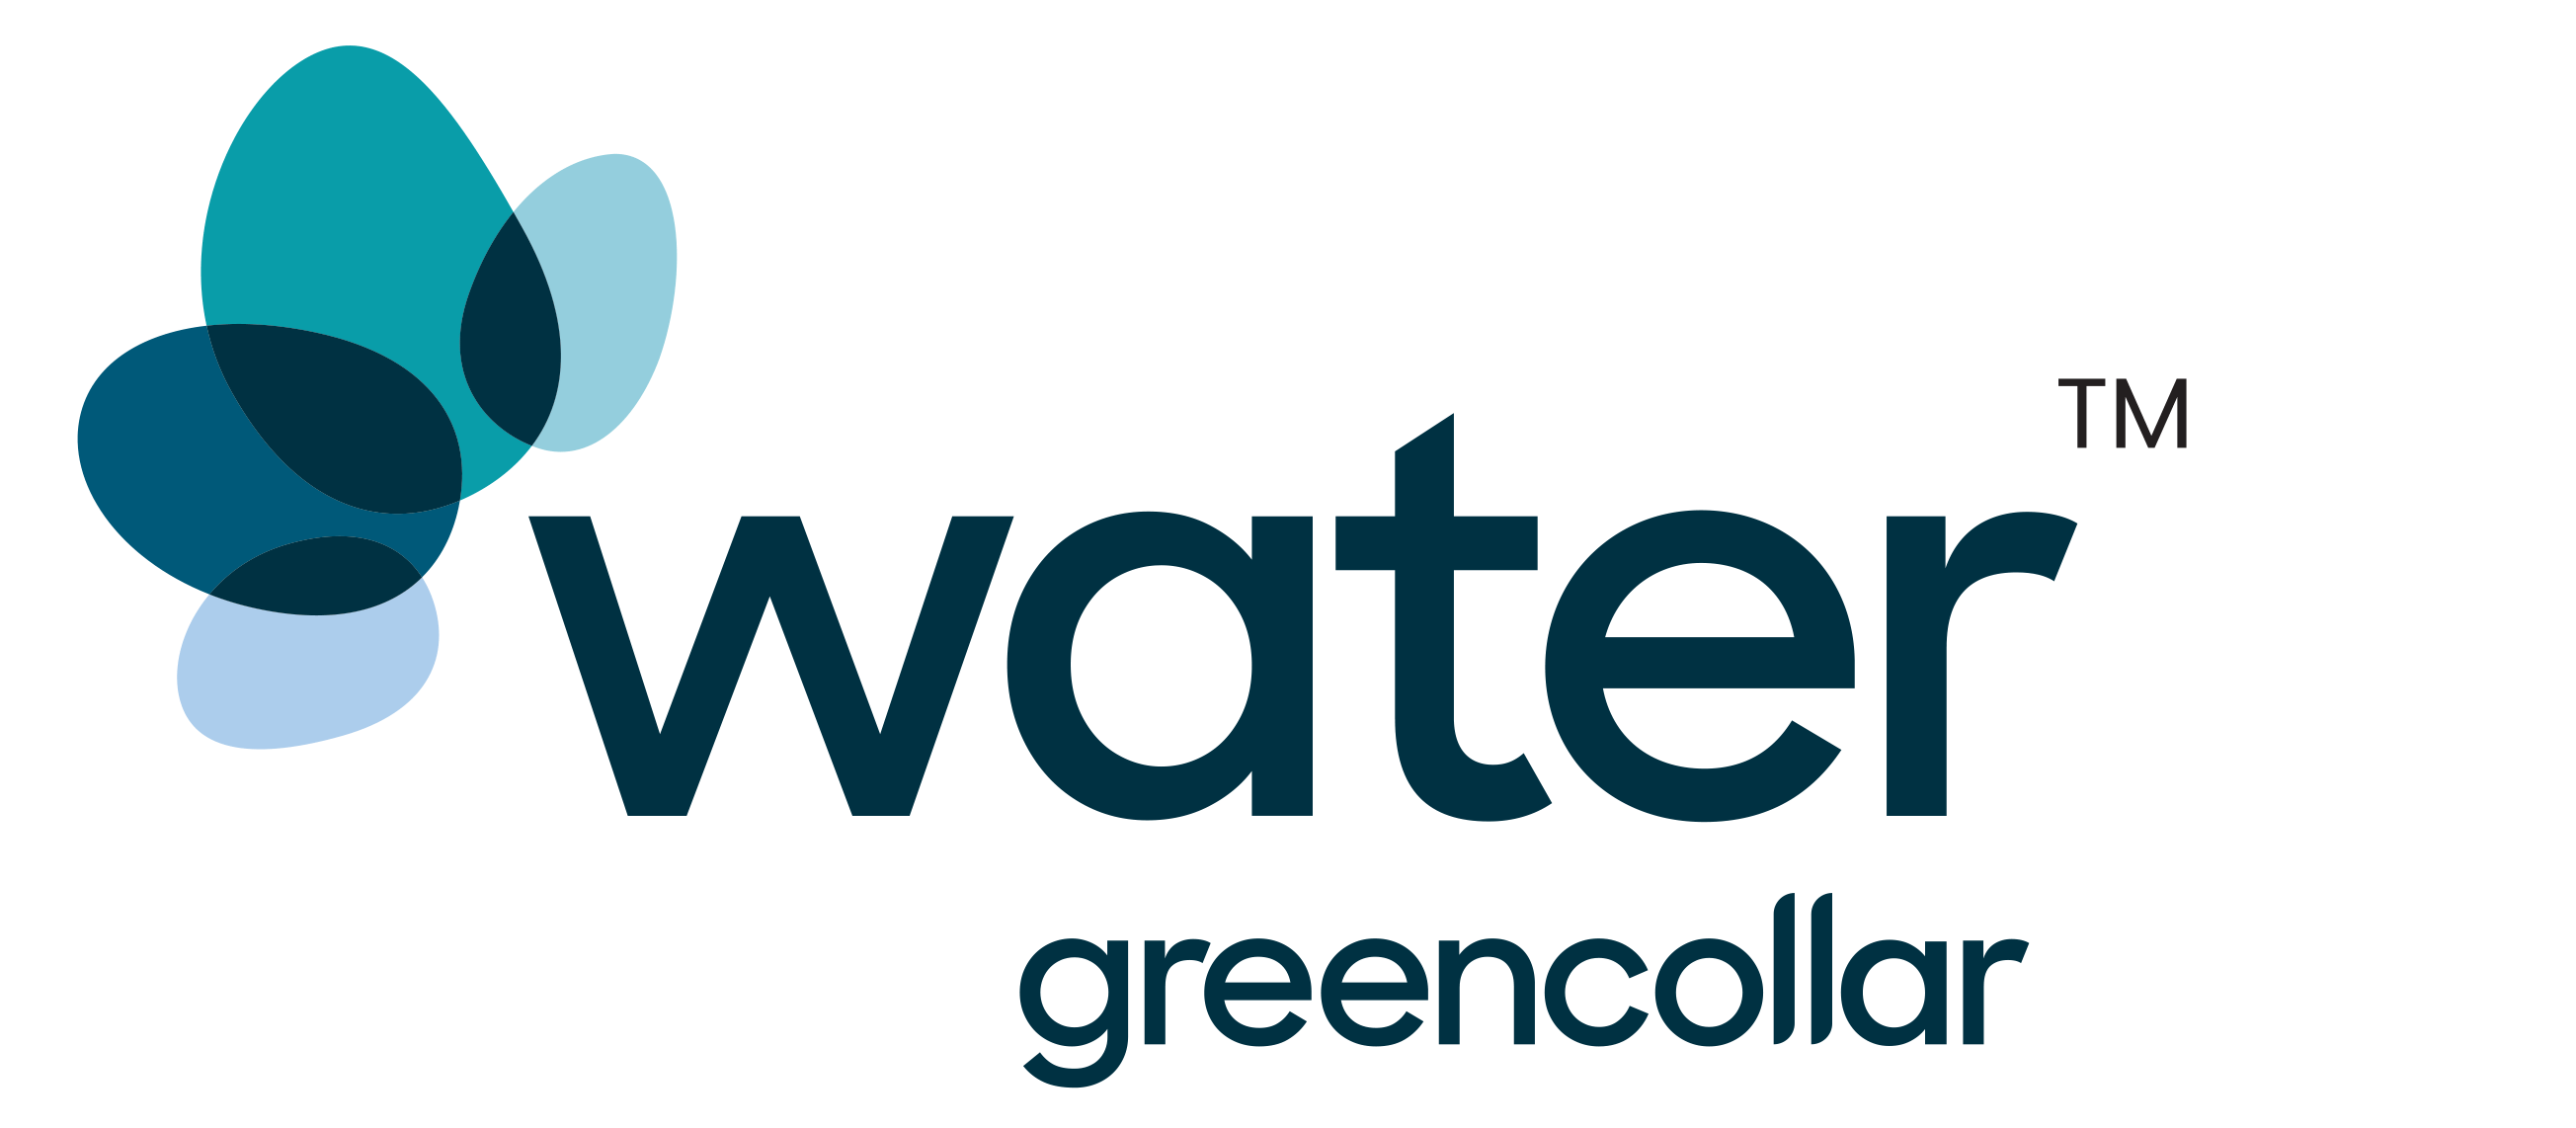 greencollar water logo TM